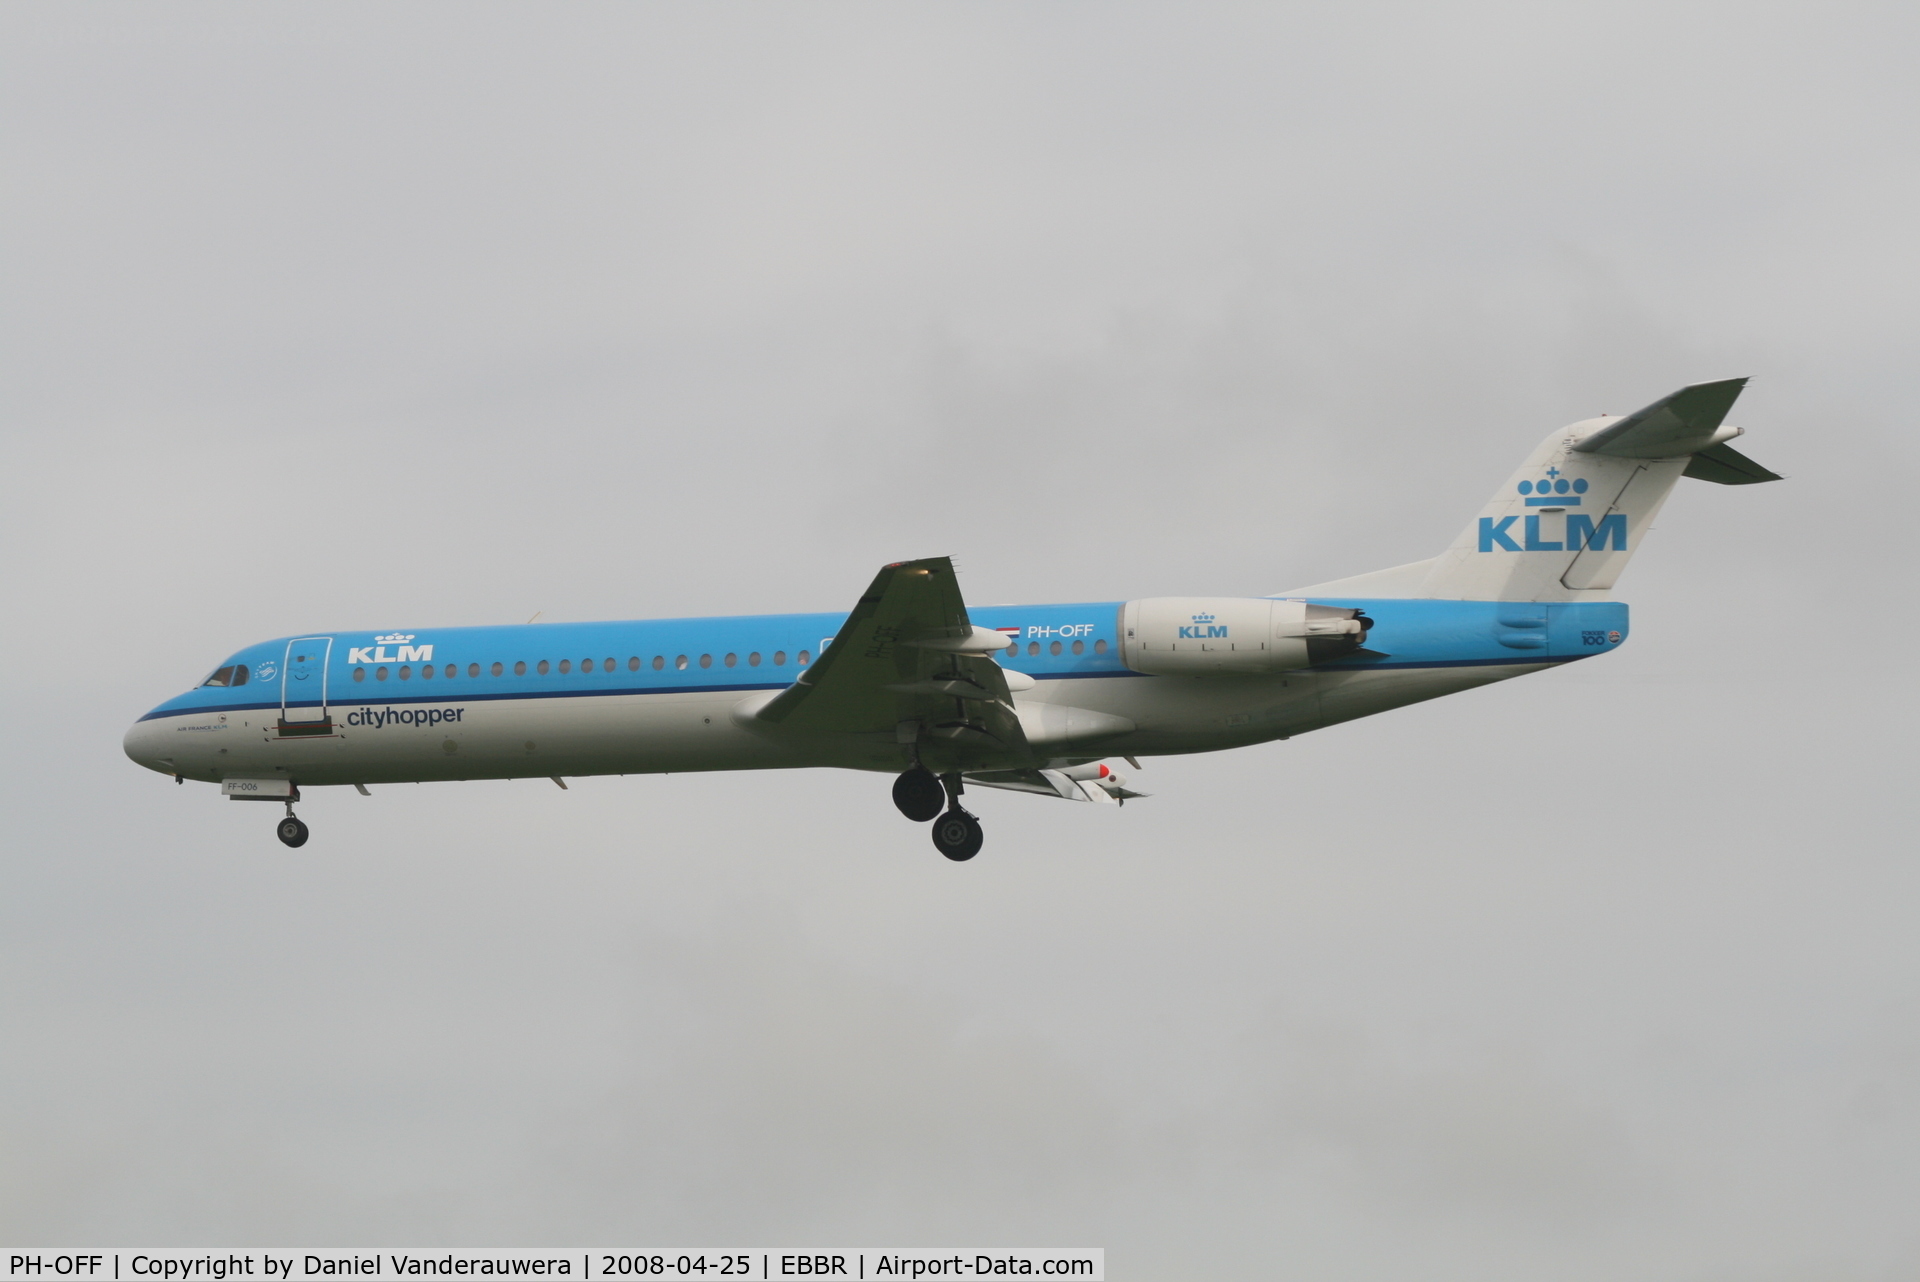 PH-OFF, 1989 Fokker 100 (F-28-0100) C/N 11274, flight KL1723 is descending to rwy 25L